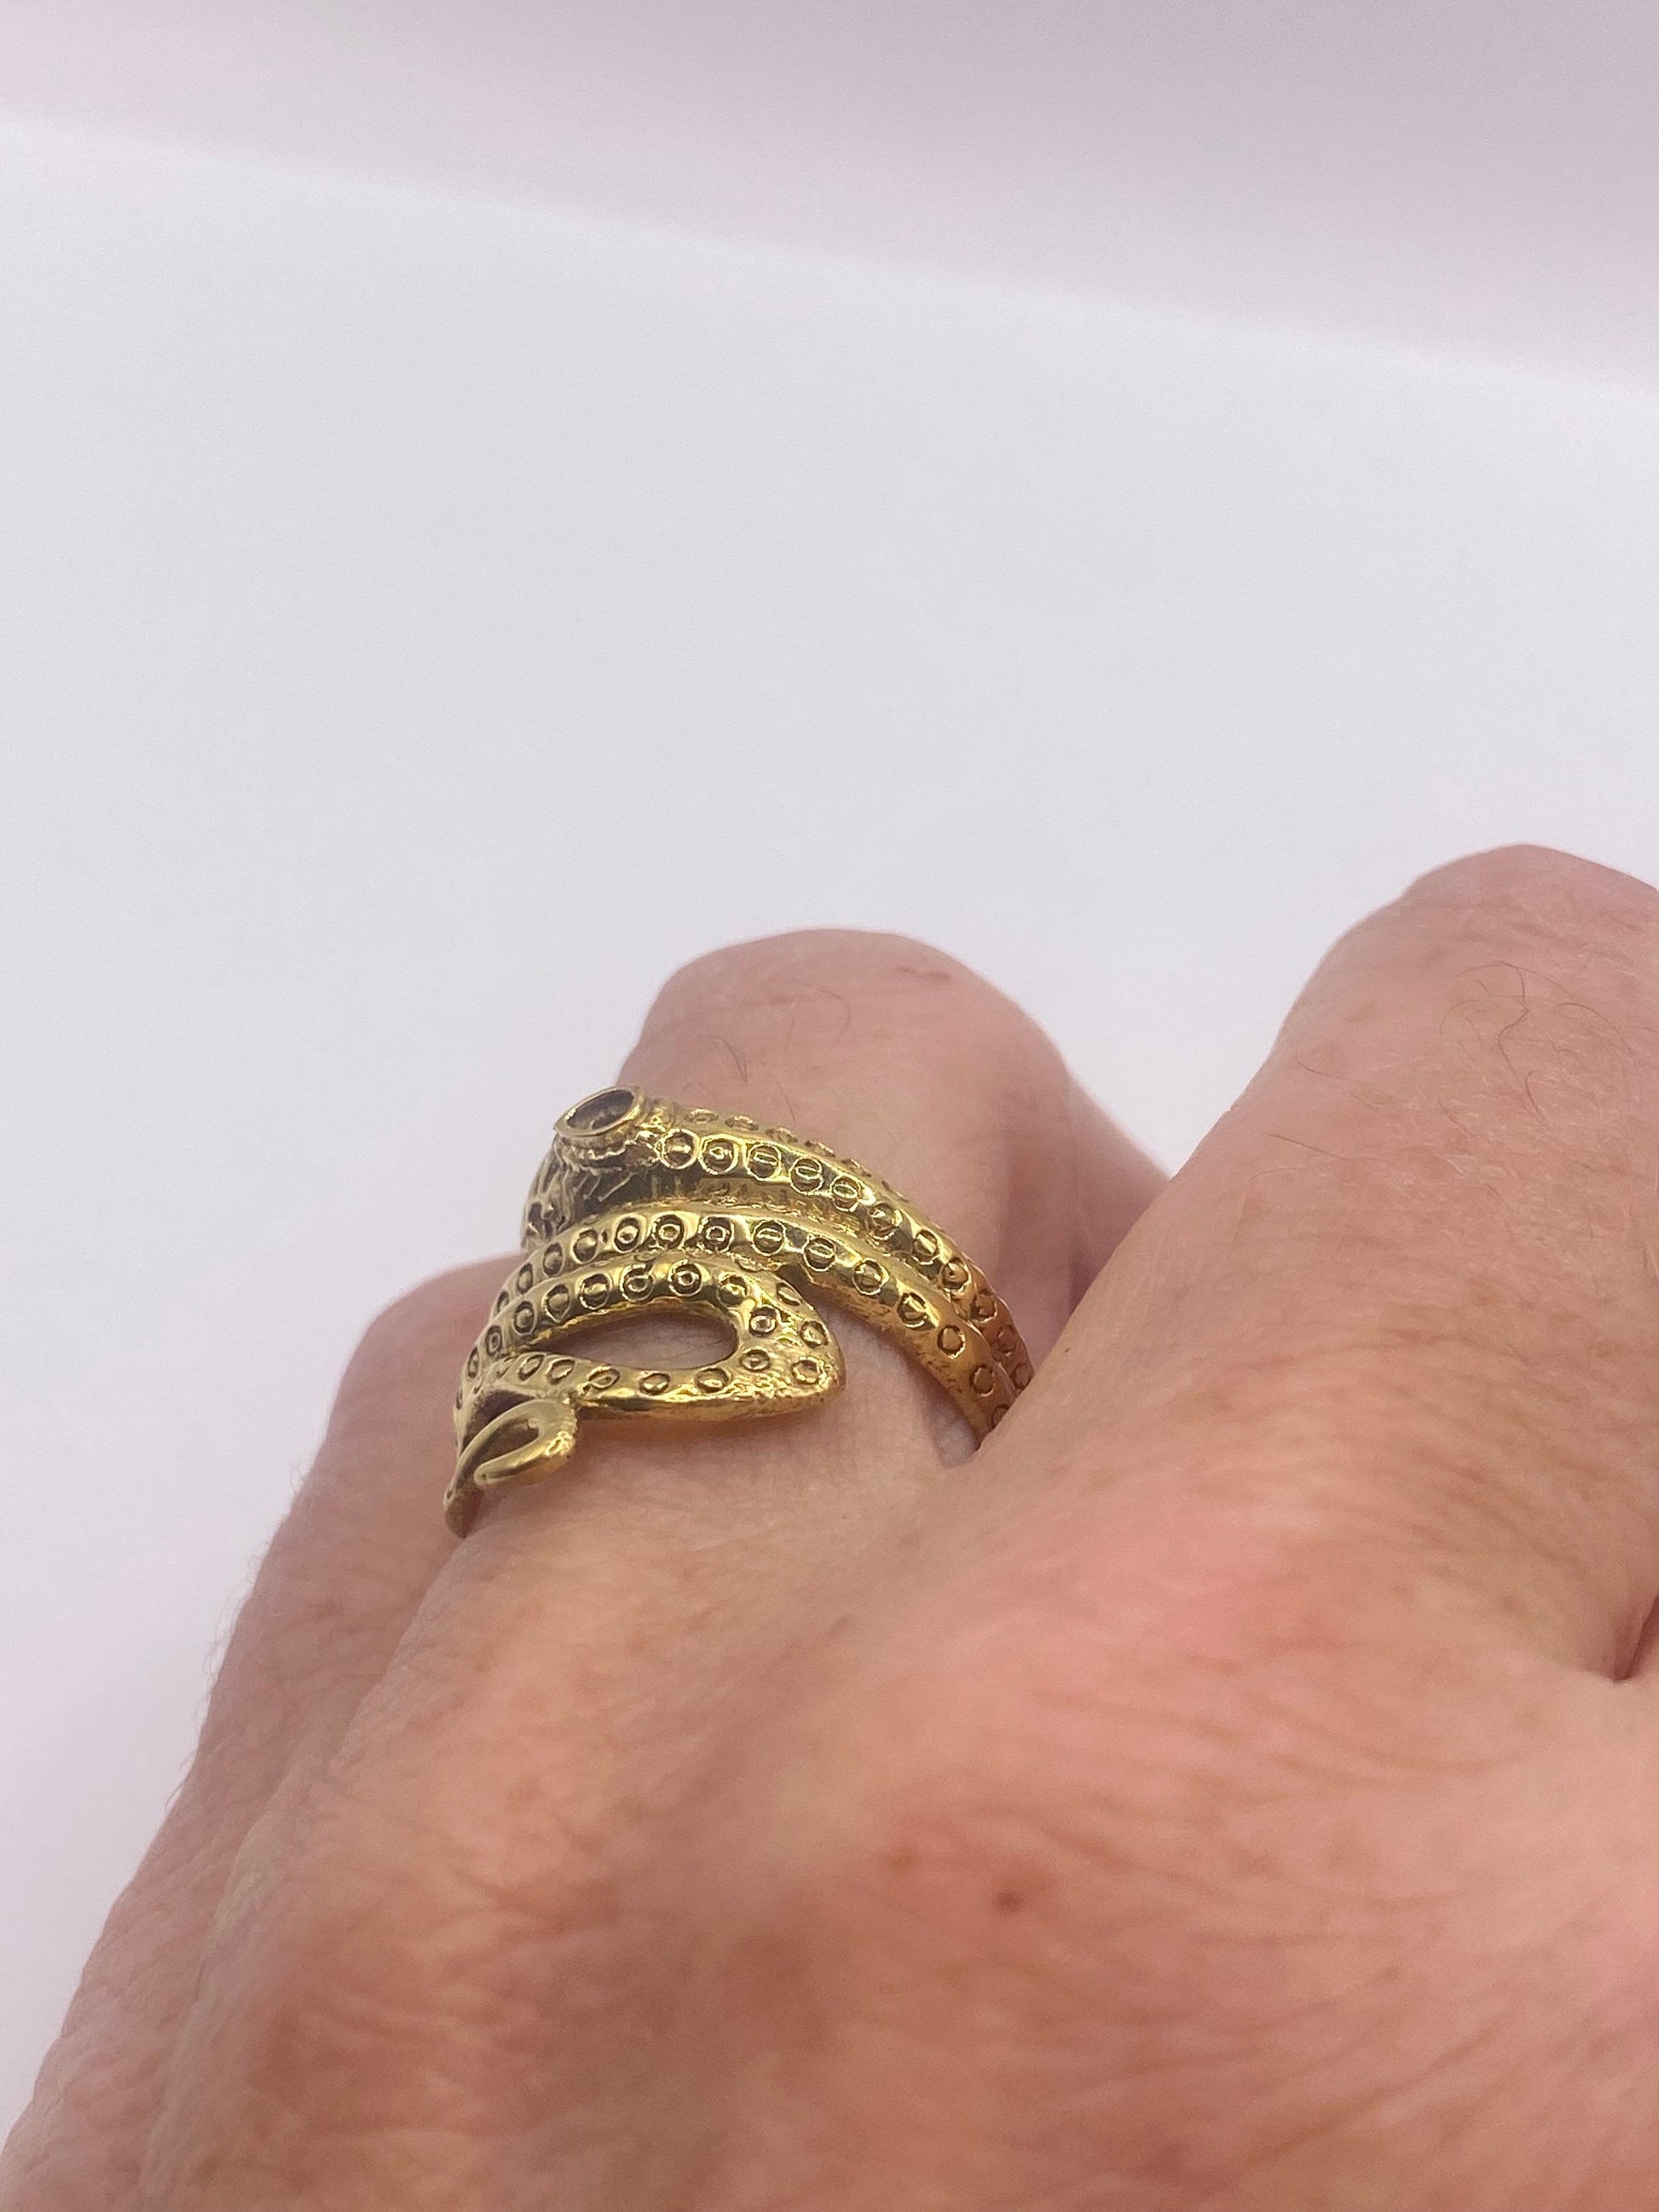 Vintage Gothic Golden Bronze Snake Serpent Ring